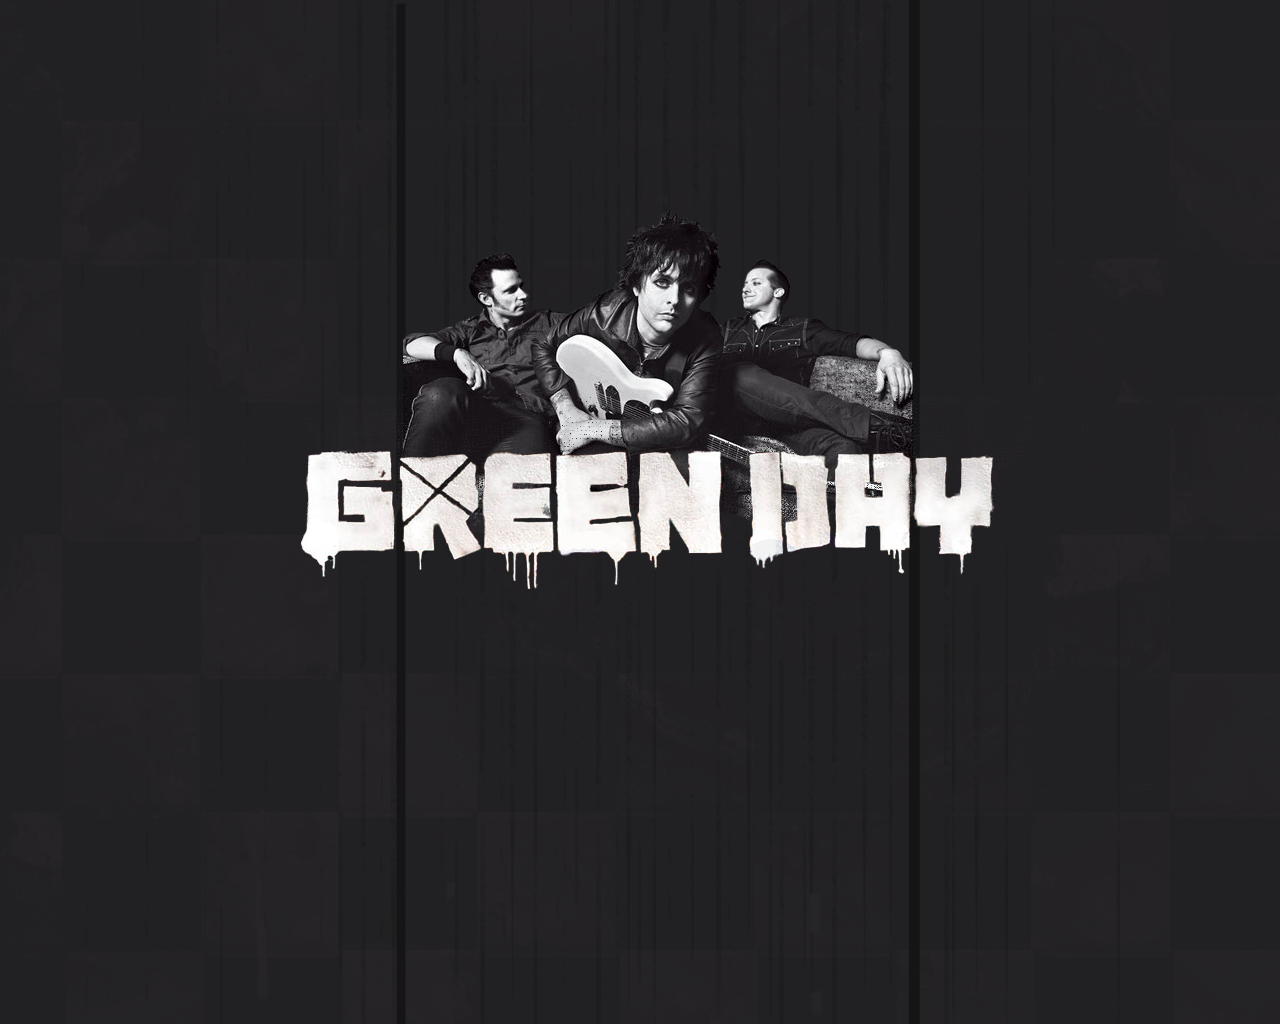 Green Day Wallpaper 2009